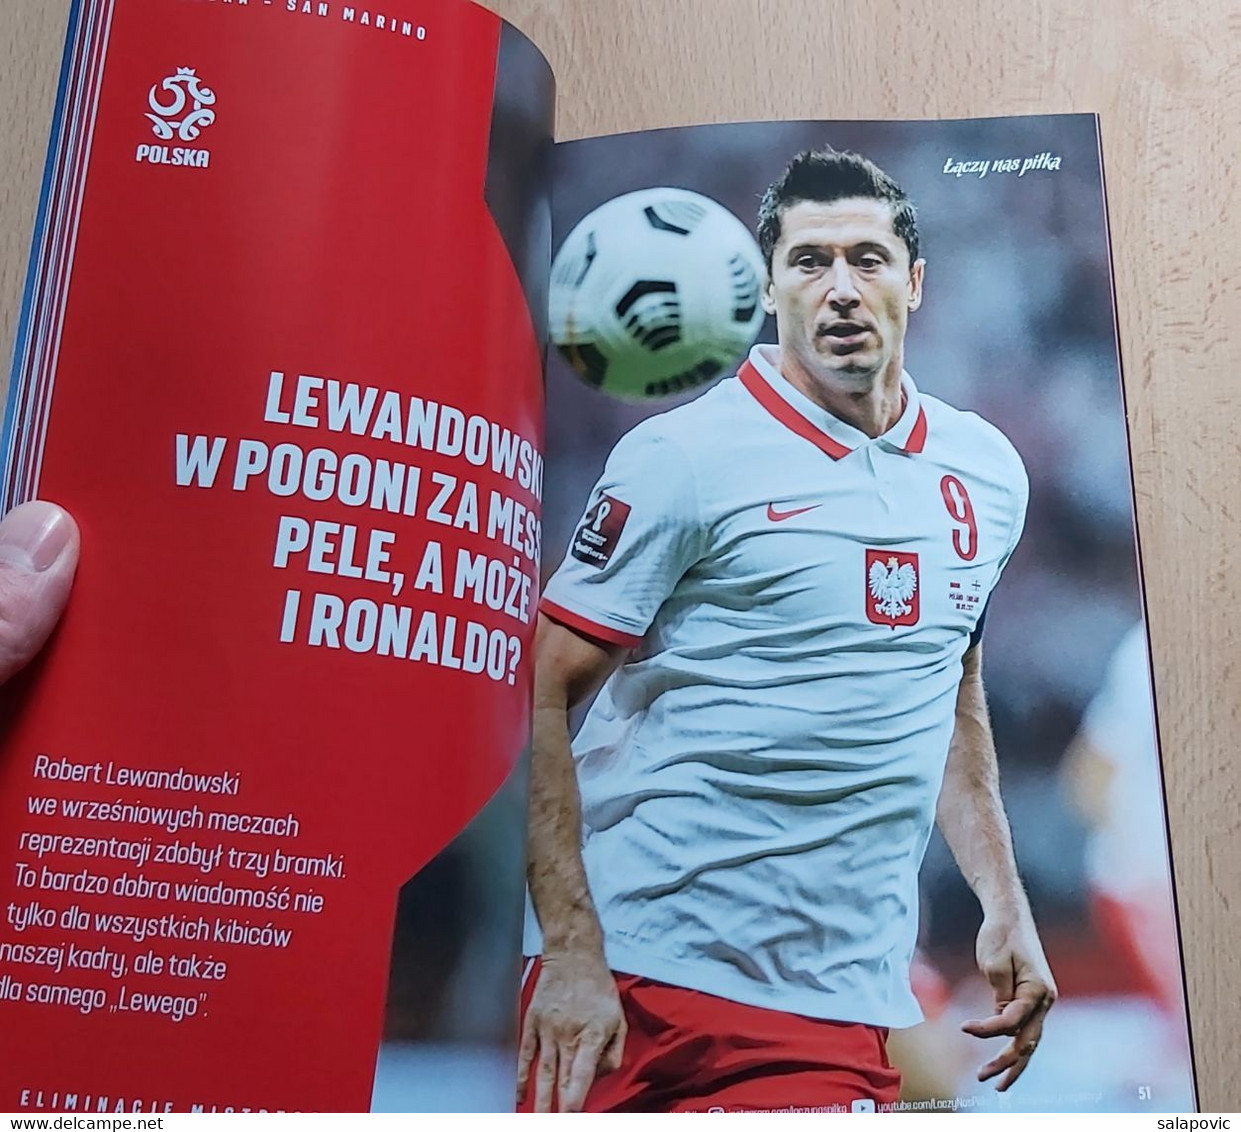 Poland V San Marino QUALIFICATIONS FOR FIFA WORLD CUP QATAR 2022, 9. 10. 2021 FOOTBALL CROATIA FOOTBALL MATCH PROGRAM - Livres